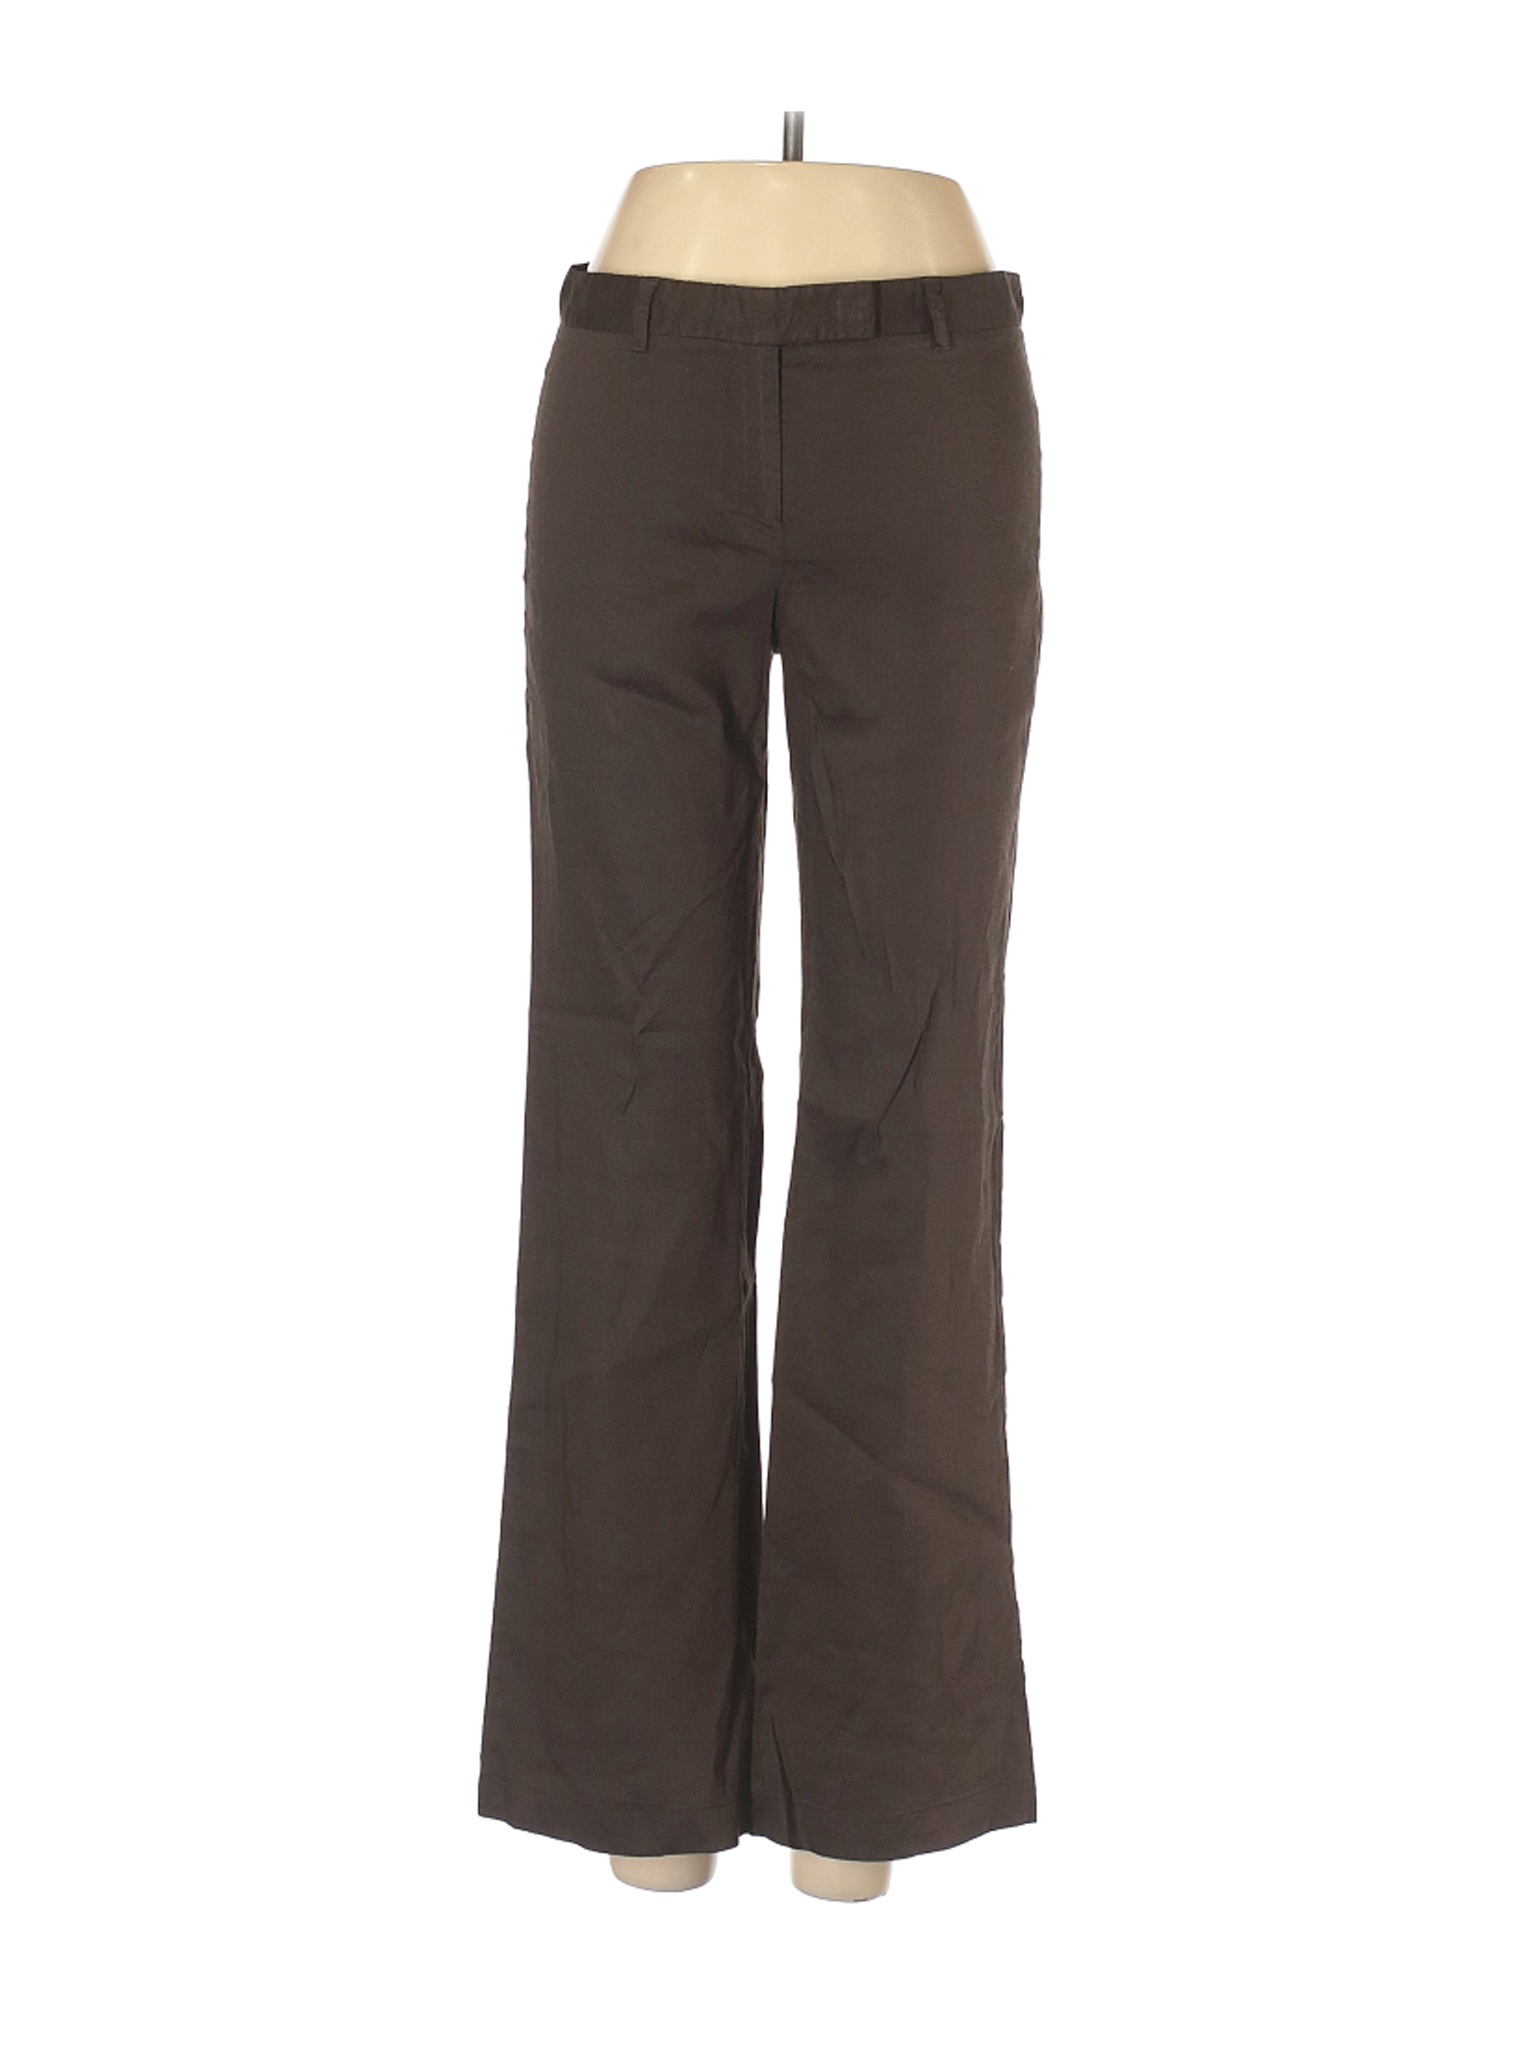 Theory Women Brown Linen Pants 2 | eBay